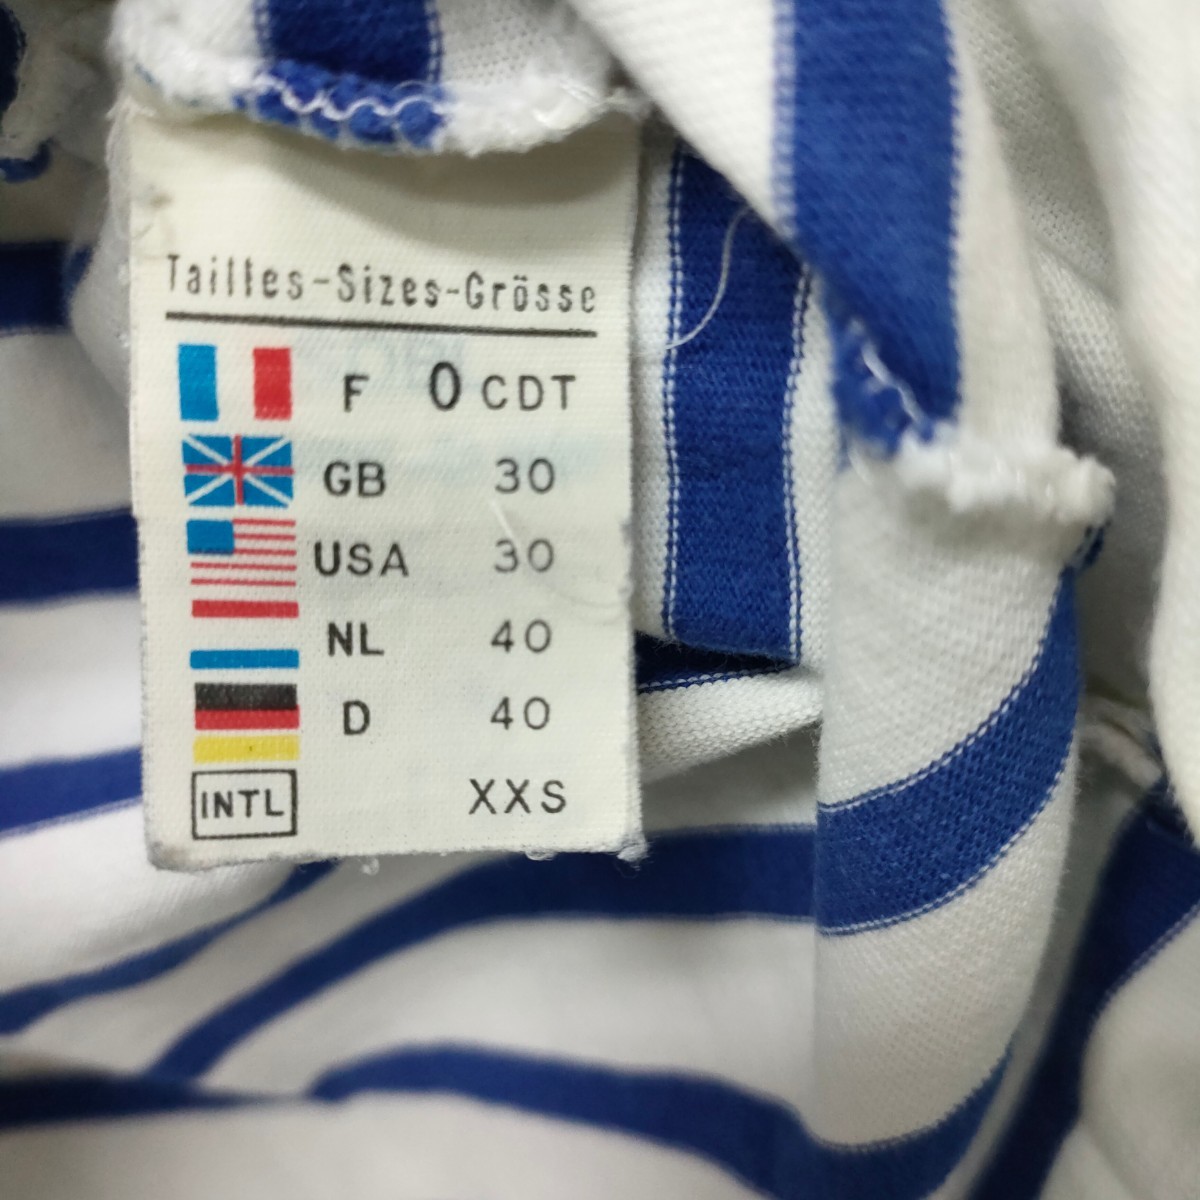 SAINT JAMES / St. James lady's middle sleeve bus k shirt white × blue border XXS size France made cotton 100% I-3483